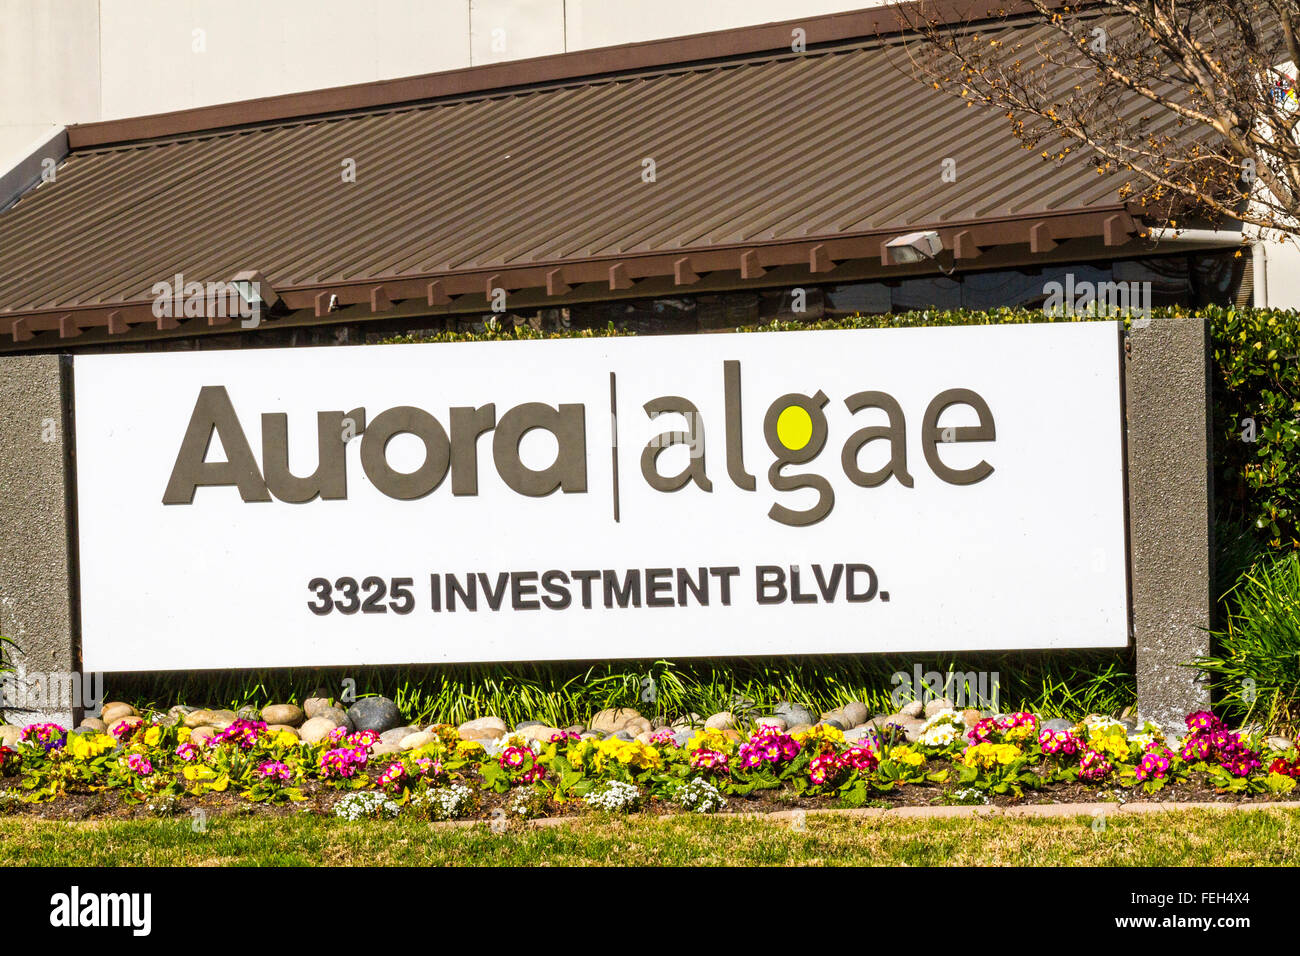 Aurora Algae in Hayward California Stock Photo